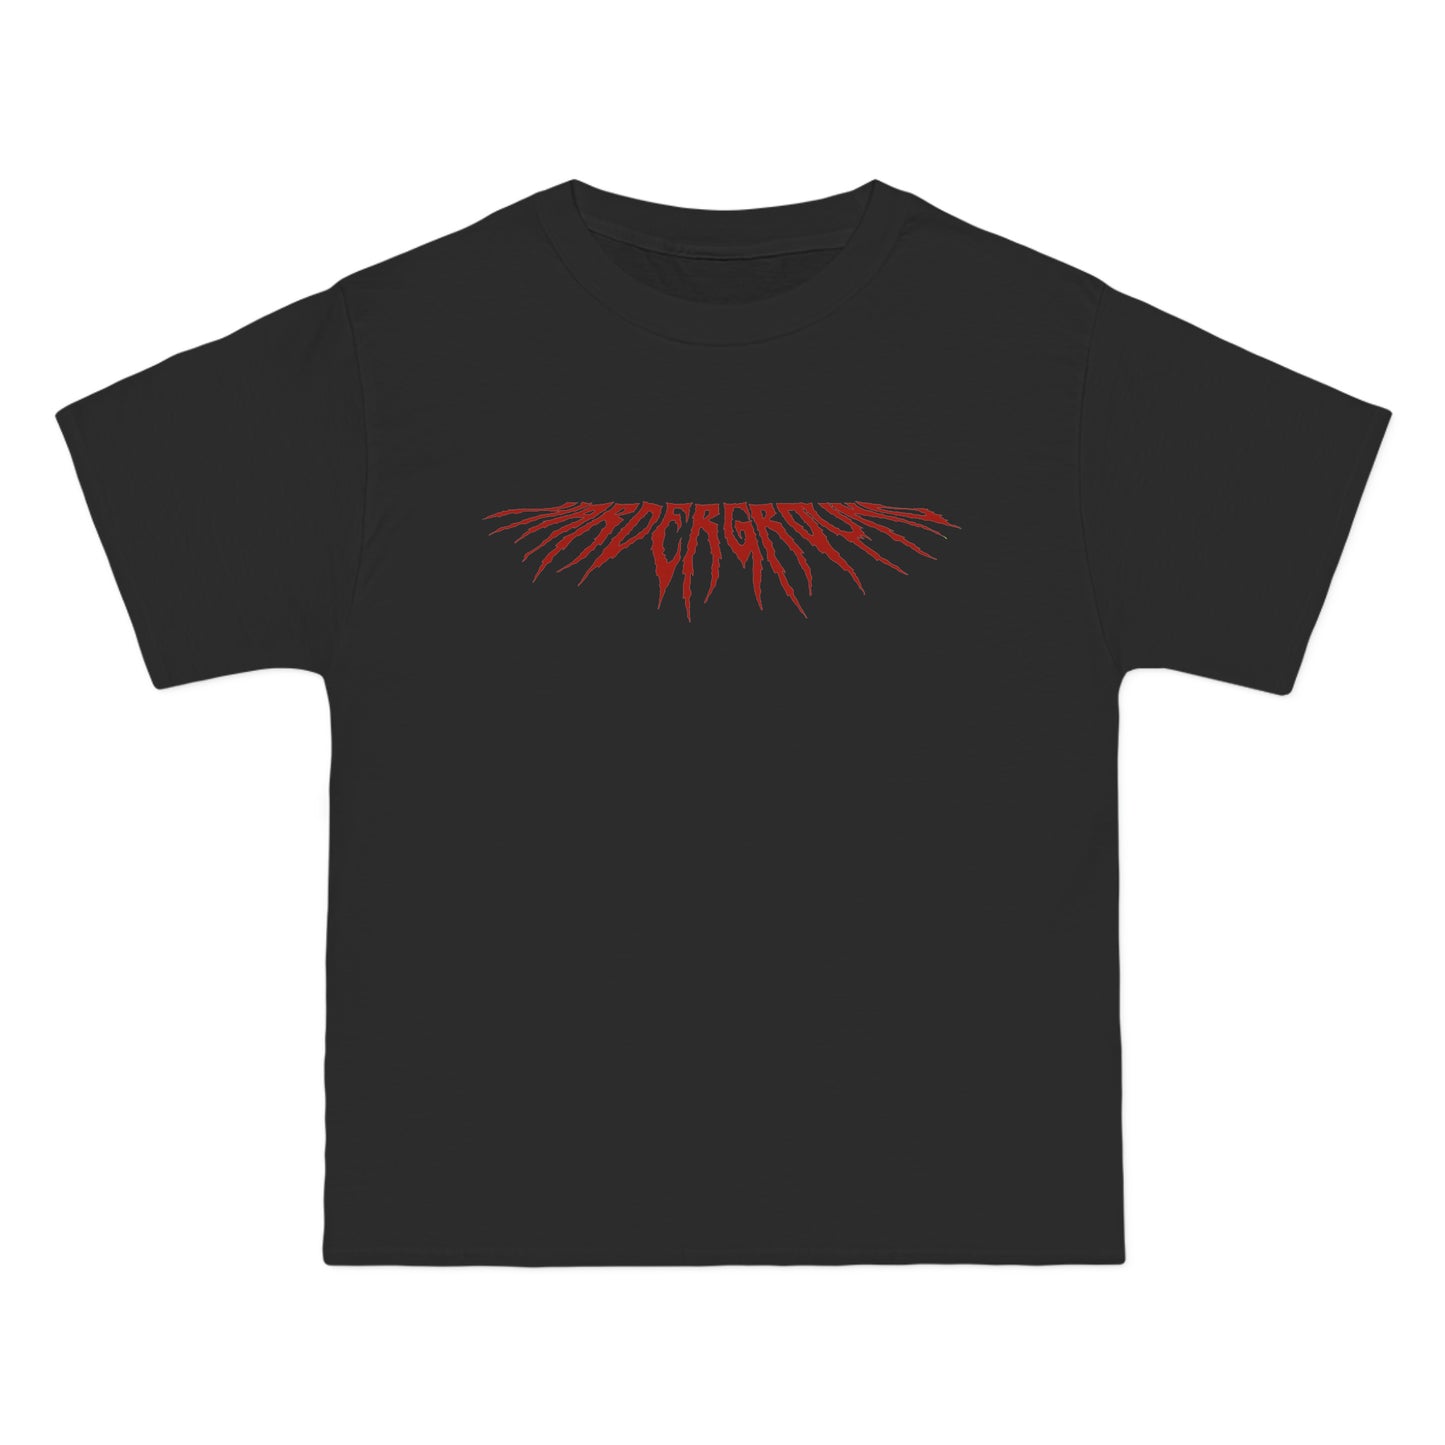 FRANKENSTEIN Harderground - Front & back logos - Beefy-T®  Short-Sleeve T-Shirt